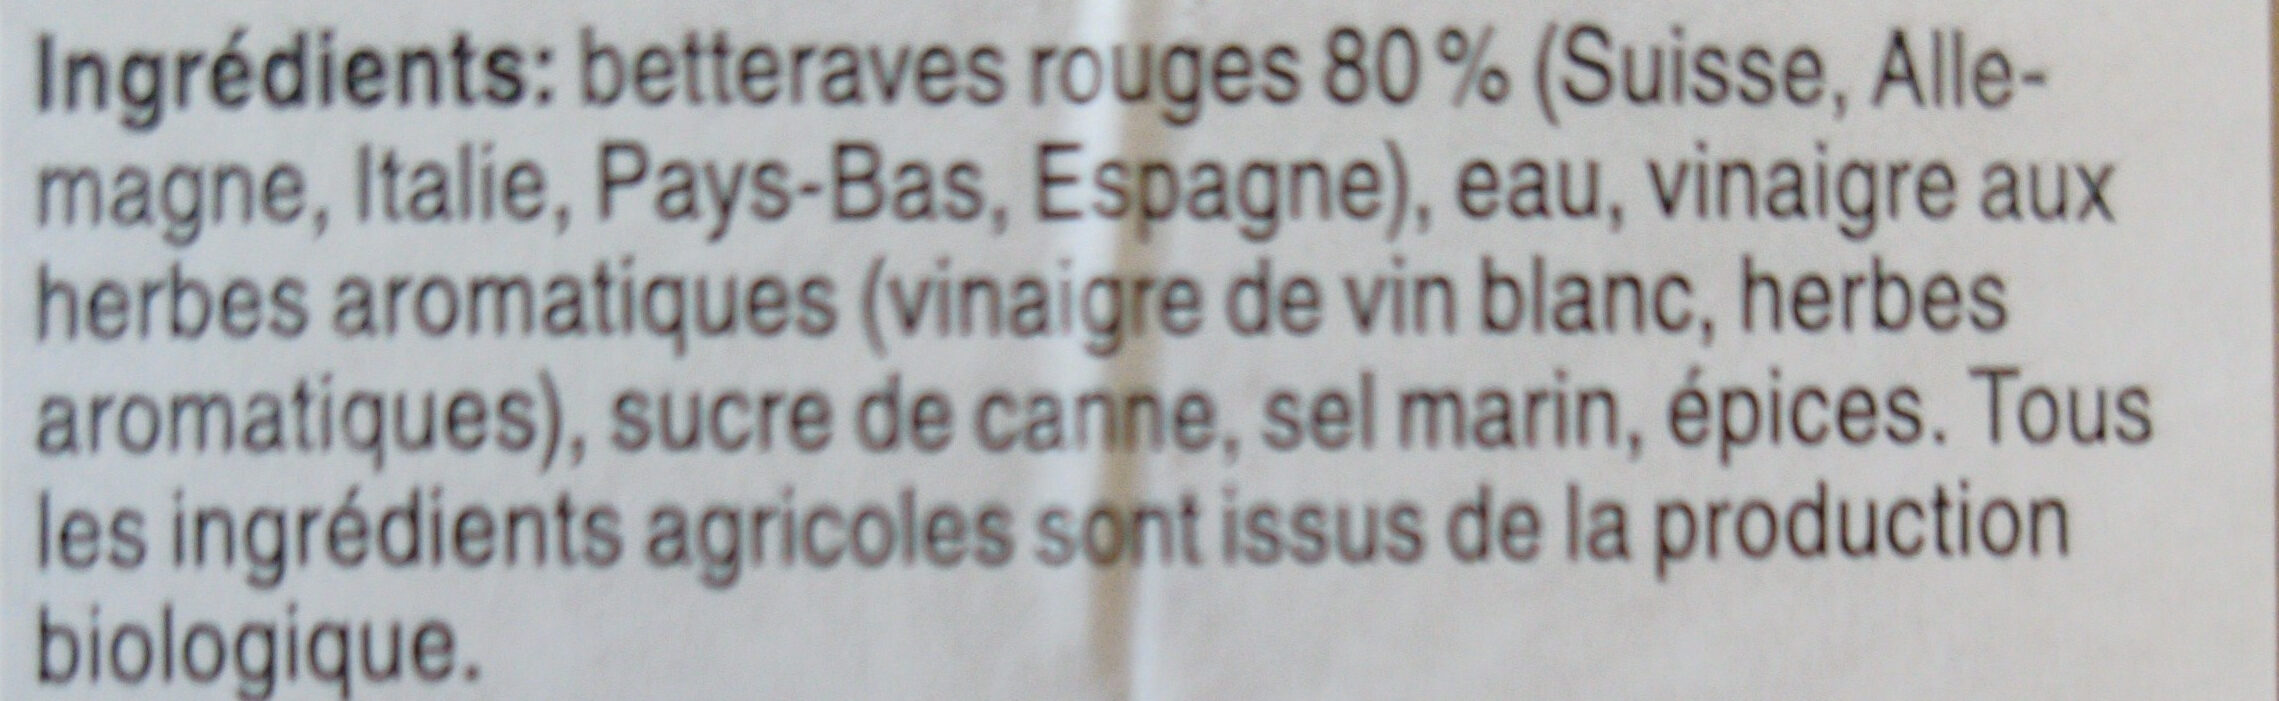 Salade de betteraves rouges bio - Ingredients - fr